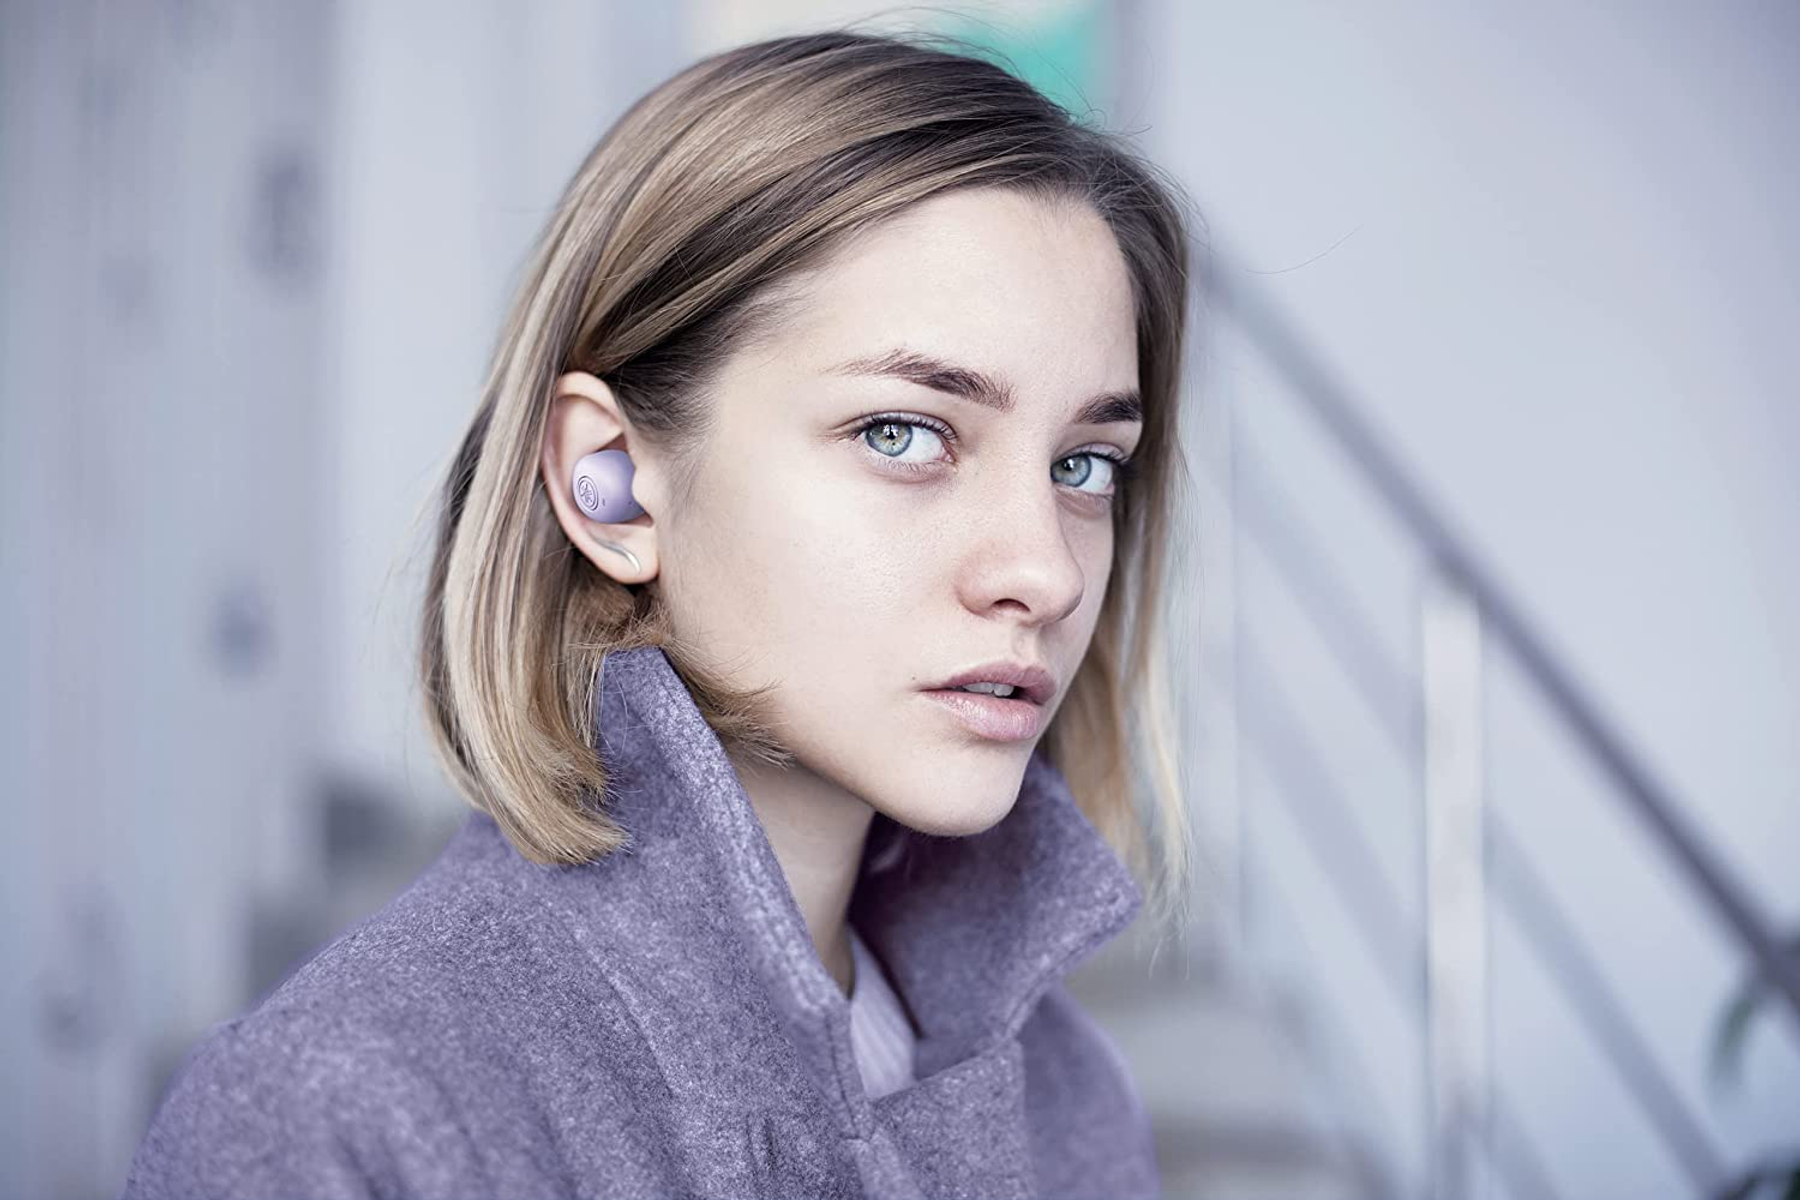 YAMAHA TW-E 3 Lila B Bluetooth In-ear Kopfhörer LILA